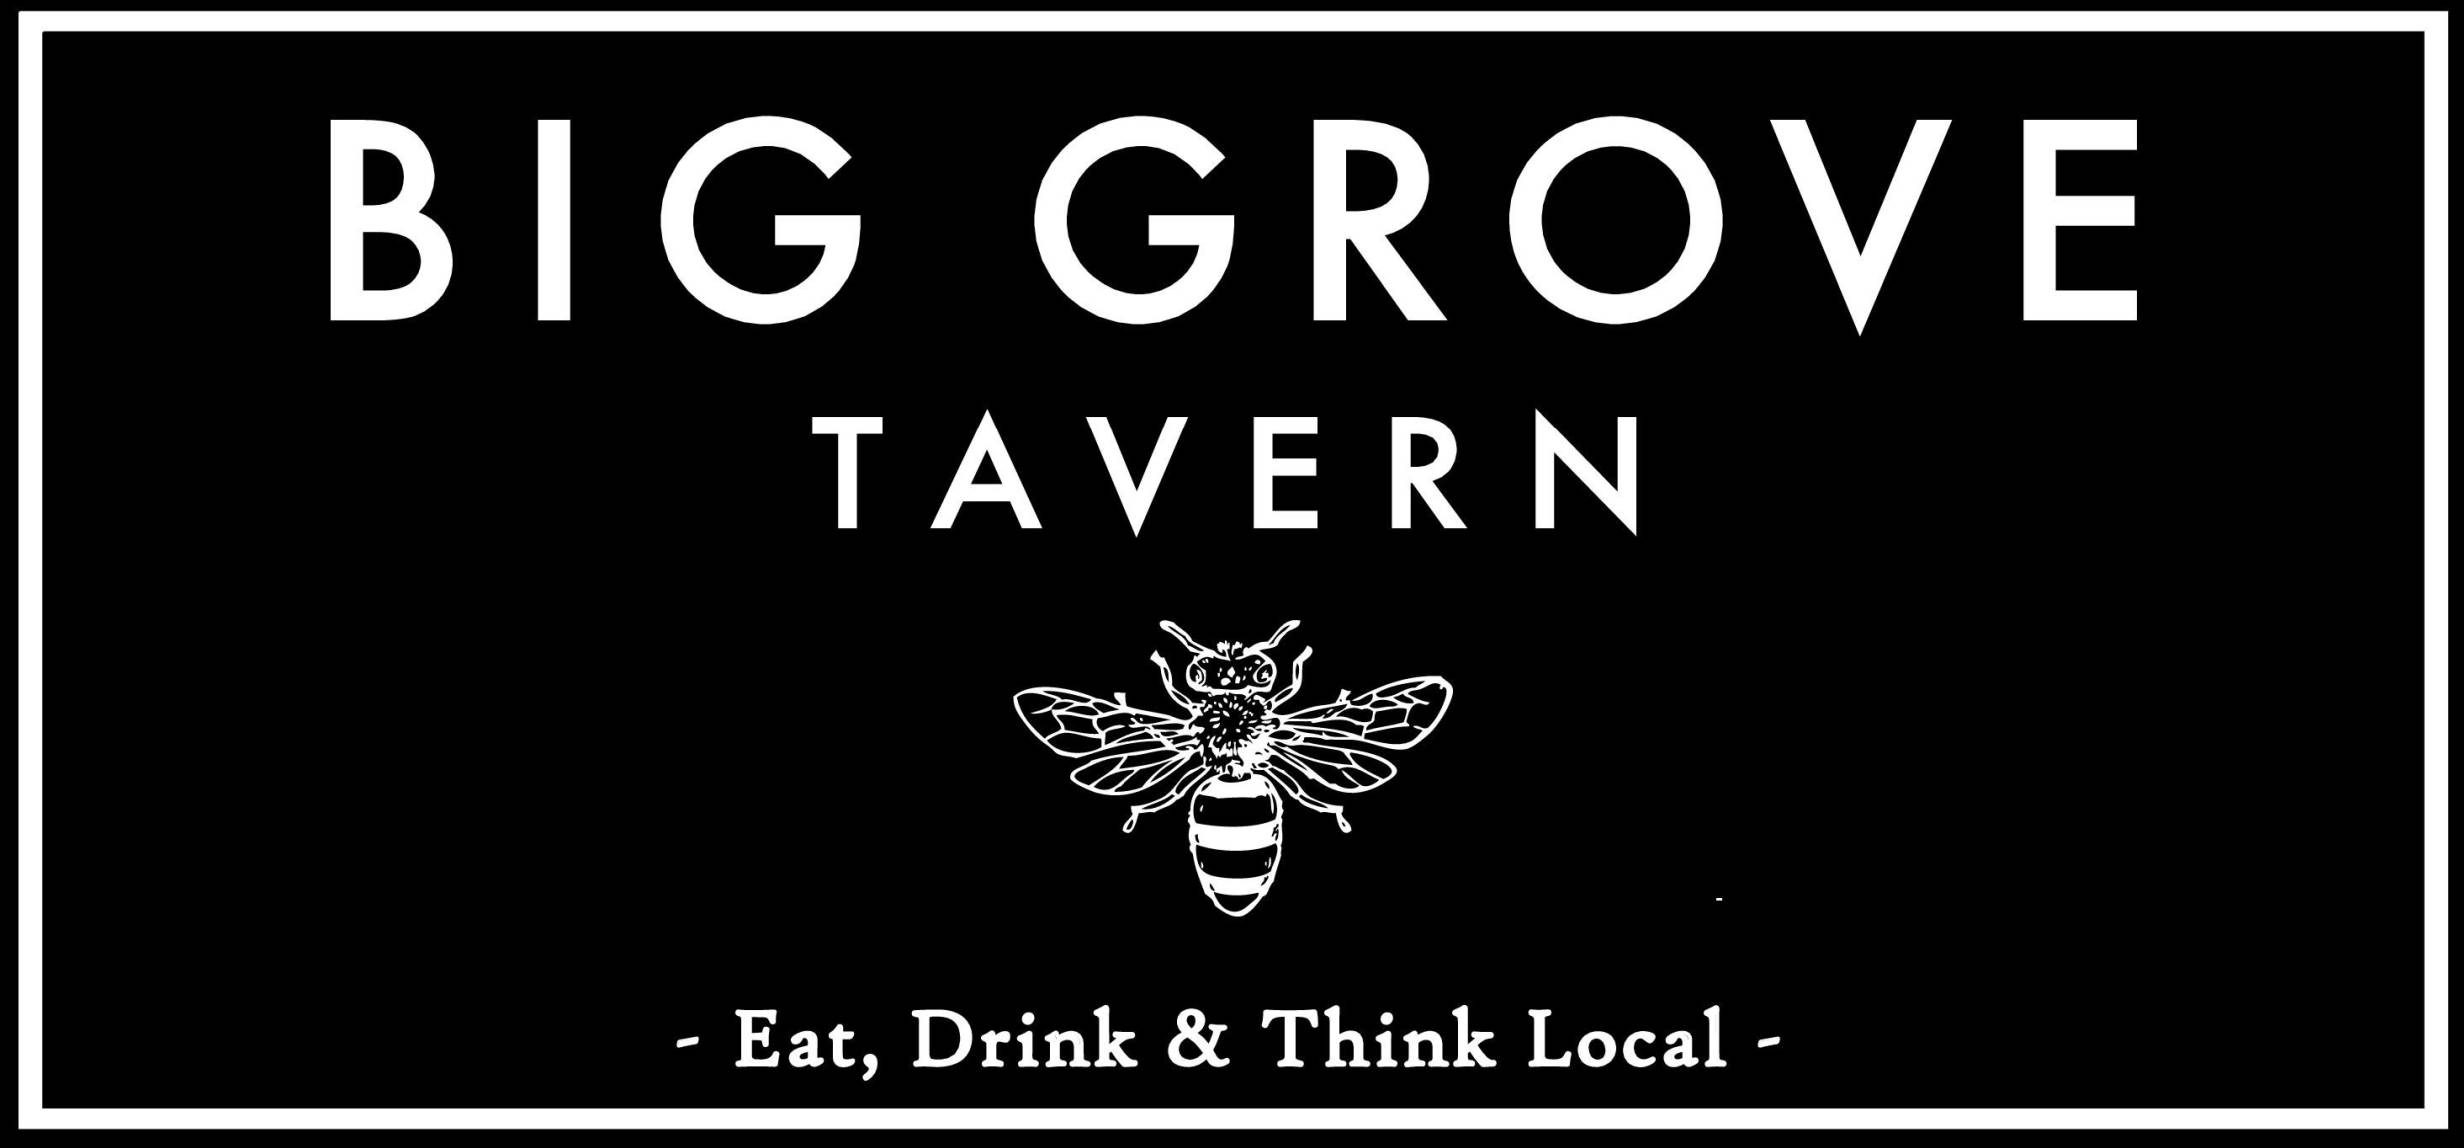 Big Grove Tavern hosting Porkapalooza this Saturday